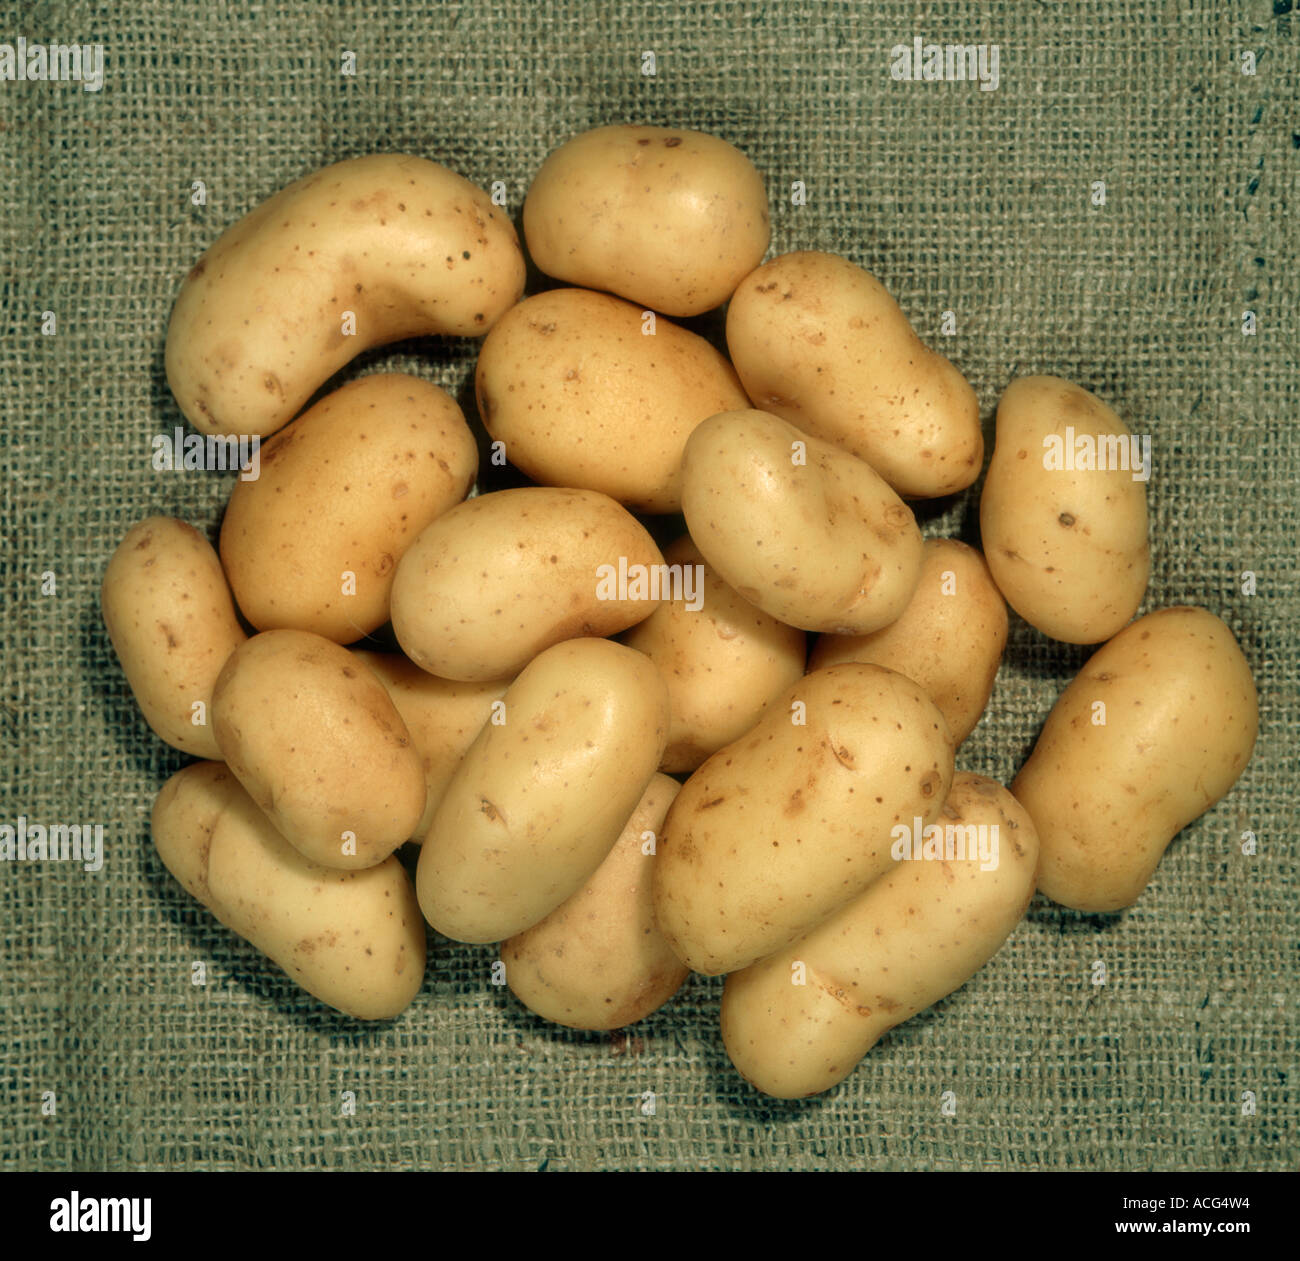 Potato tubers variety Charlotte Stock Photo